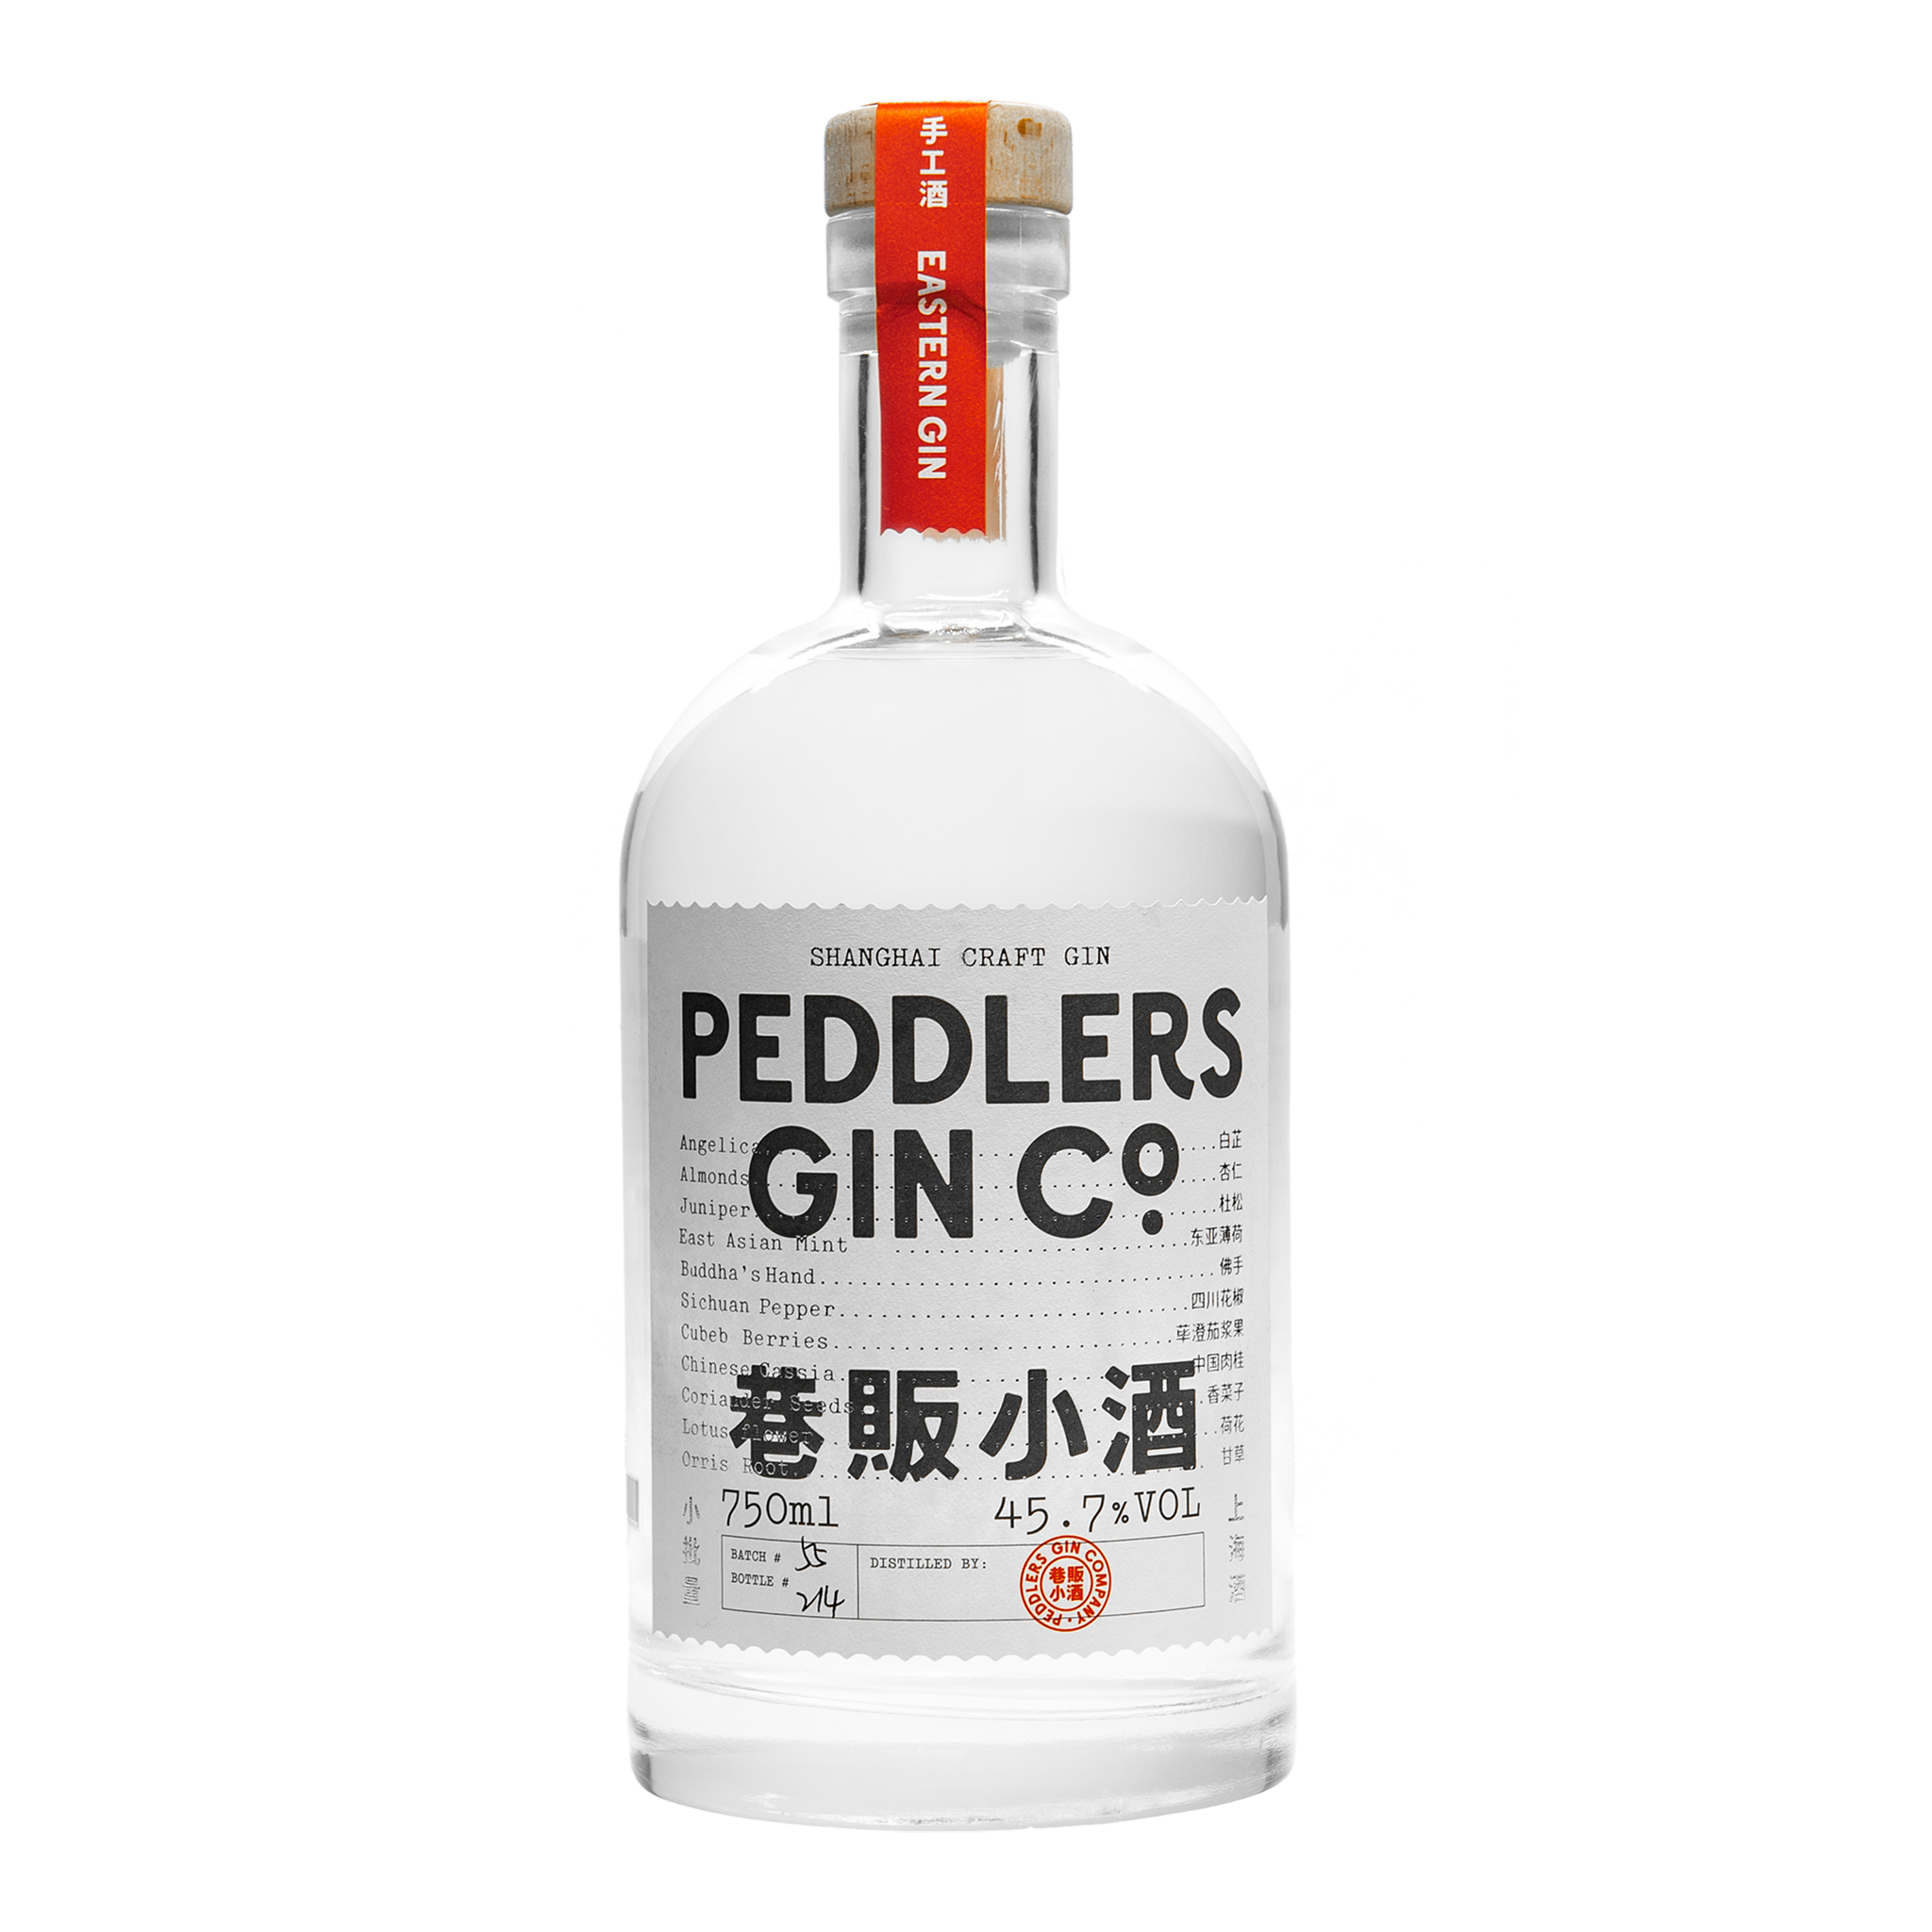 Peddlers Gin Co Rare Eastern Shanghai Craft Gin 750mL - Kent Street Cellars